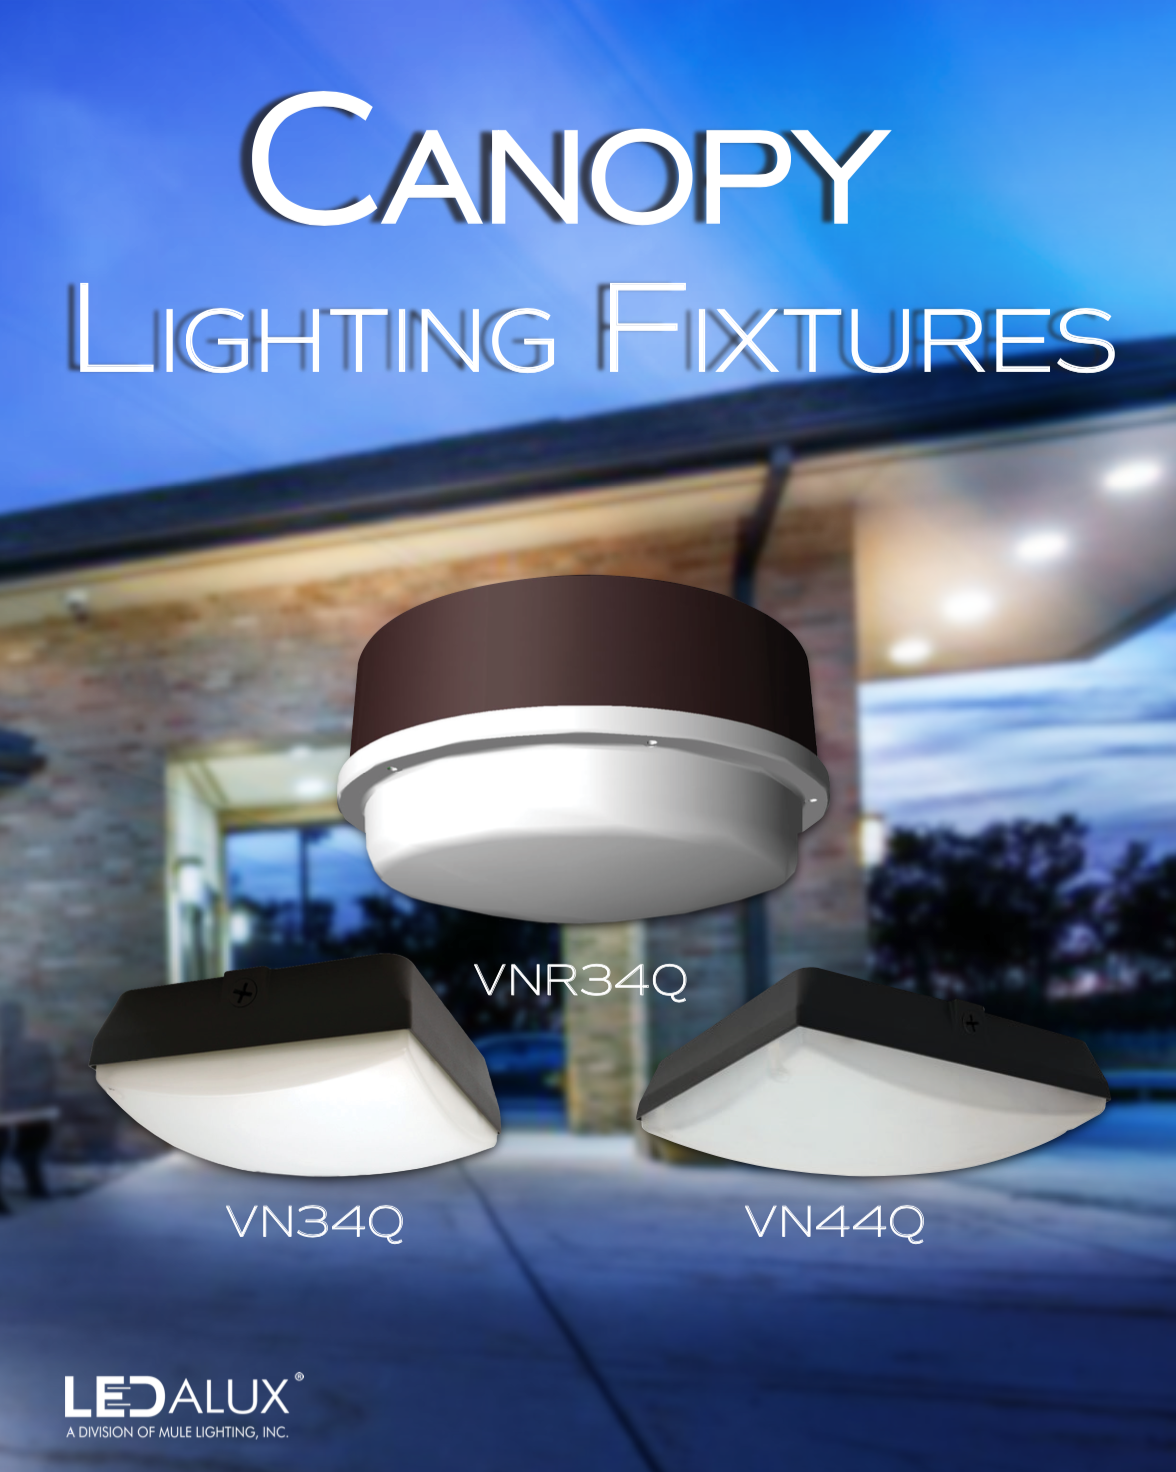 LEDalux Canopy Lighting Fixtures Literature